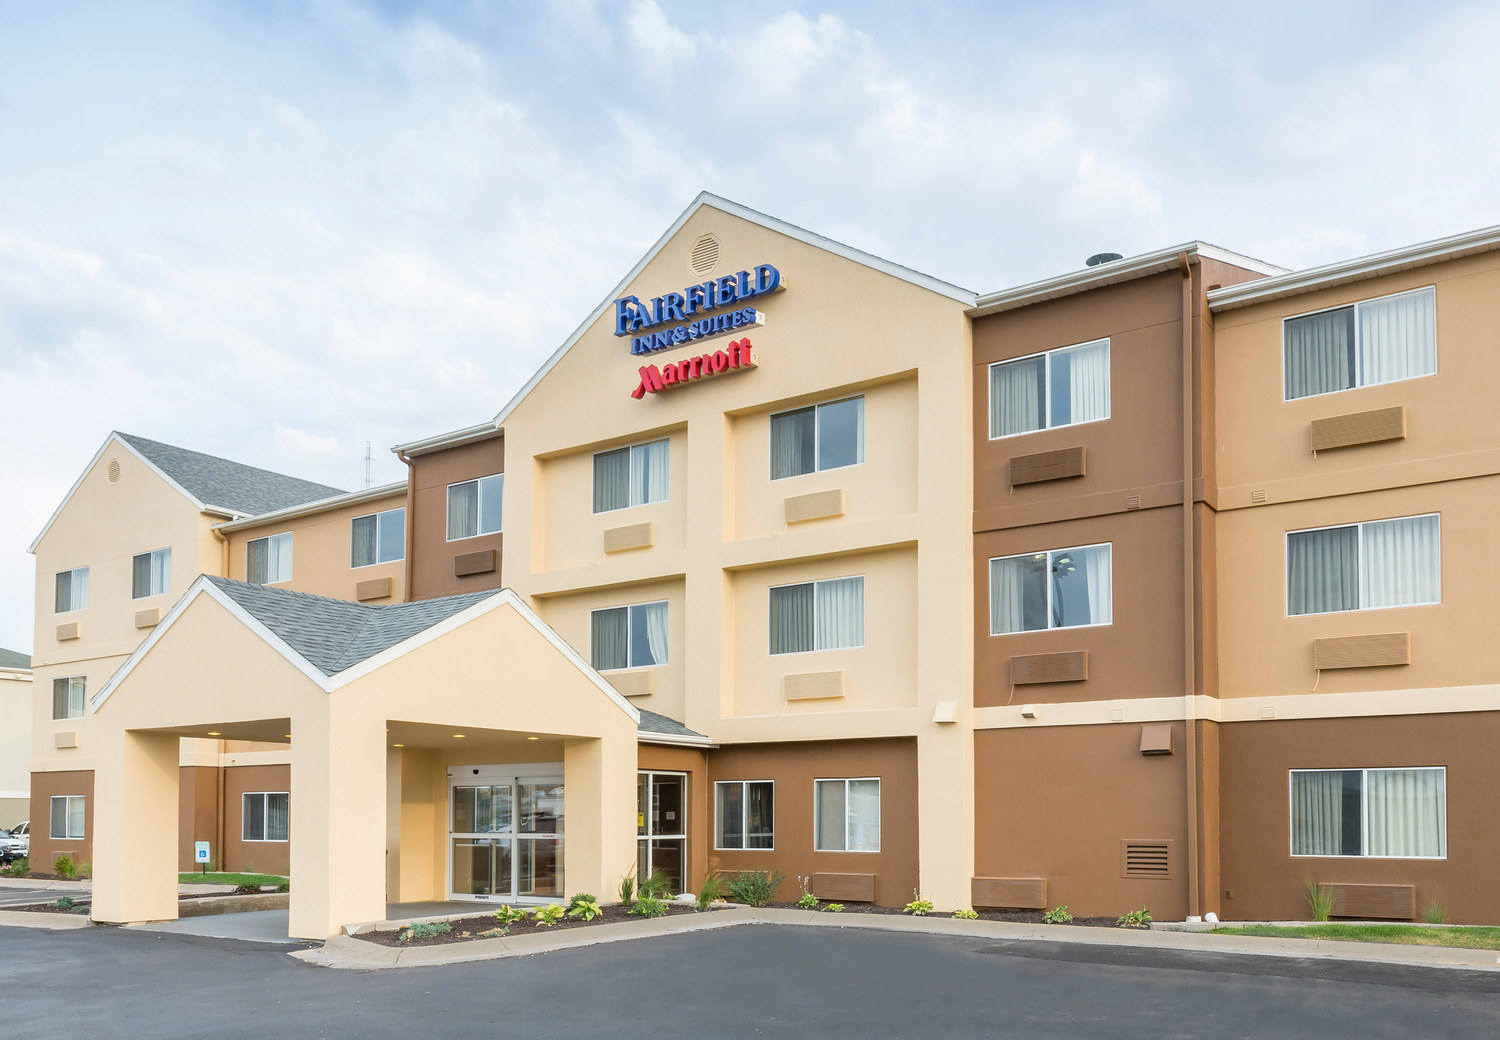 Fairfield Inn & Suites by Marriott Lincoln, Lincoln, NE Jobs | Hospitality  Online